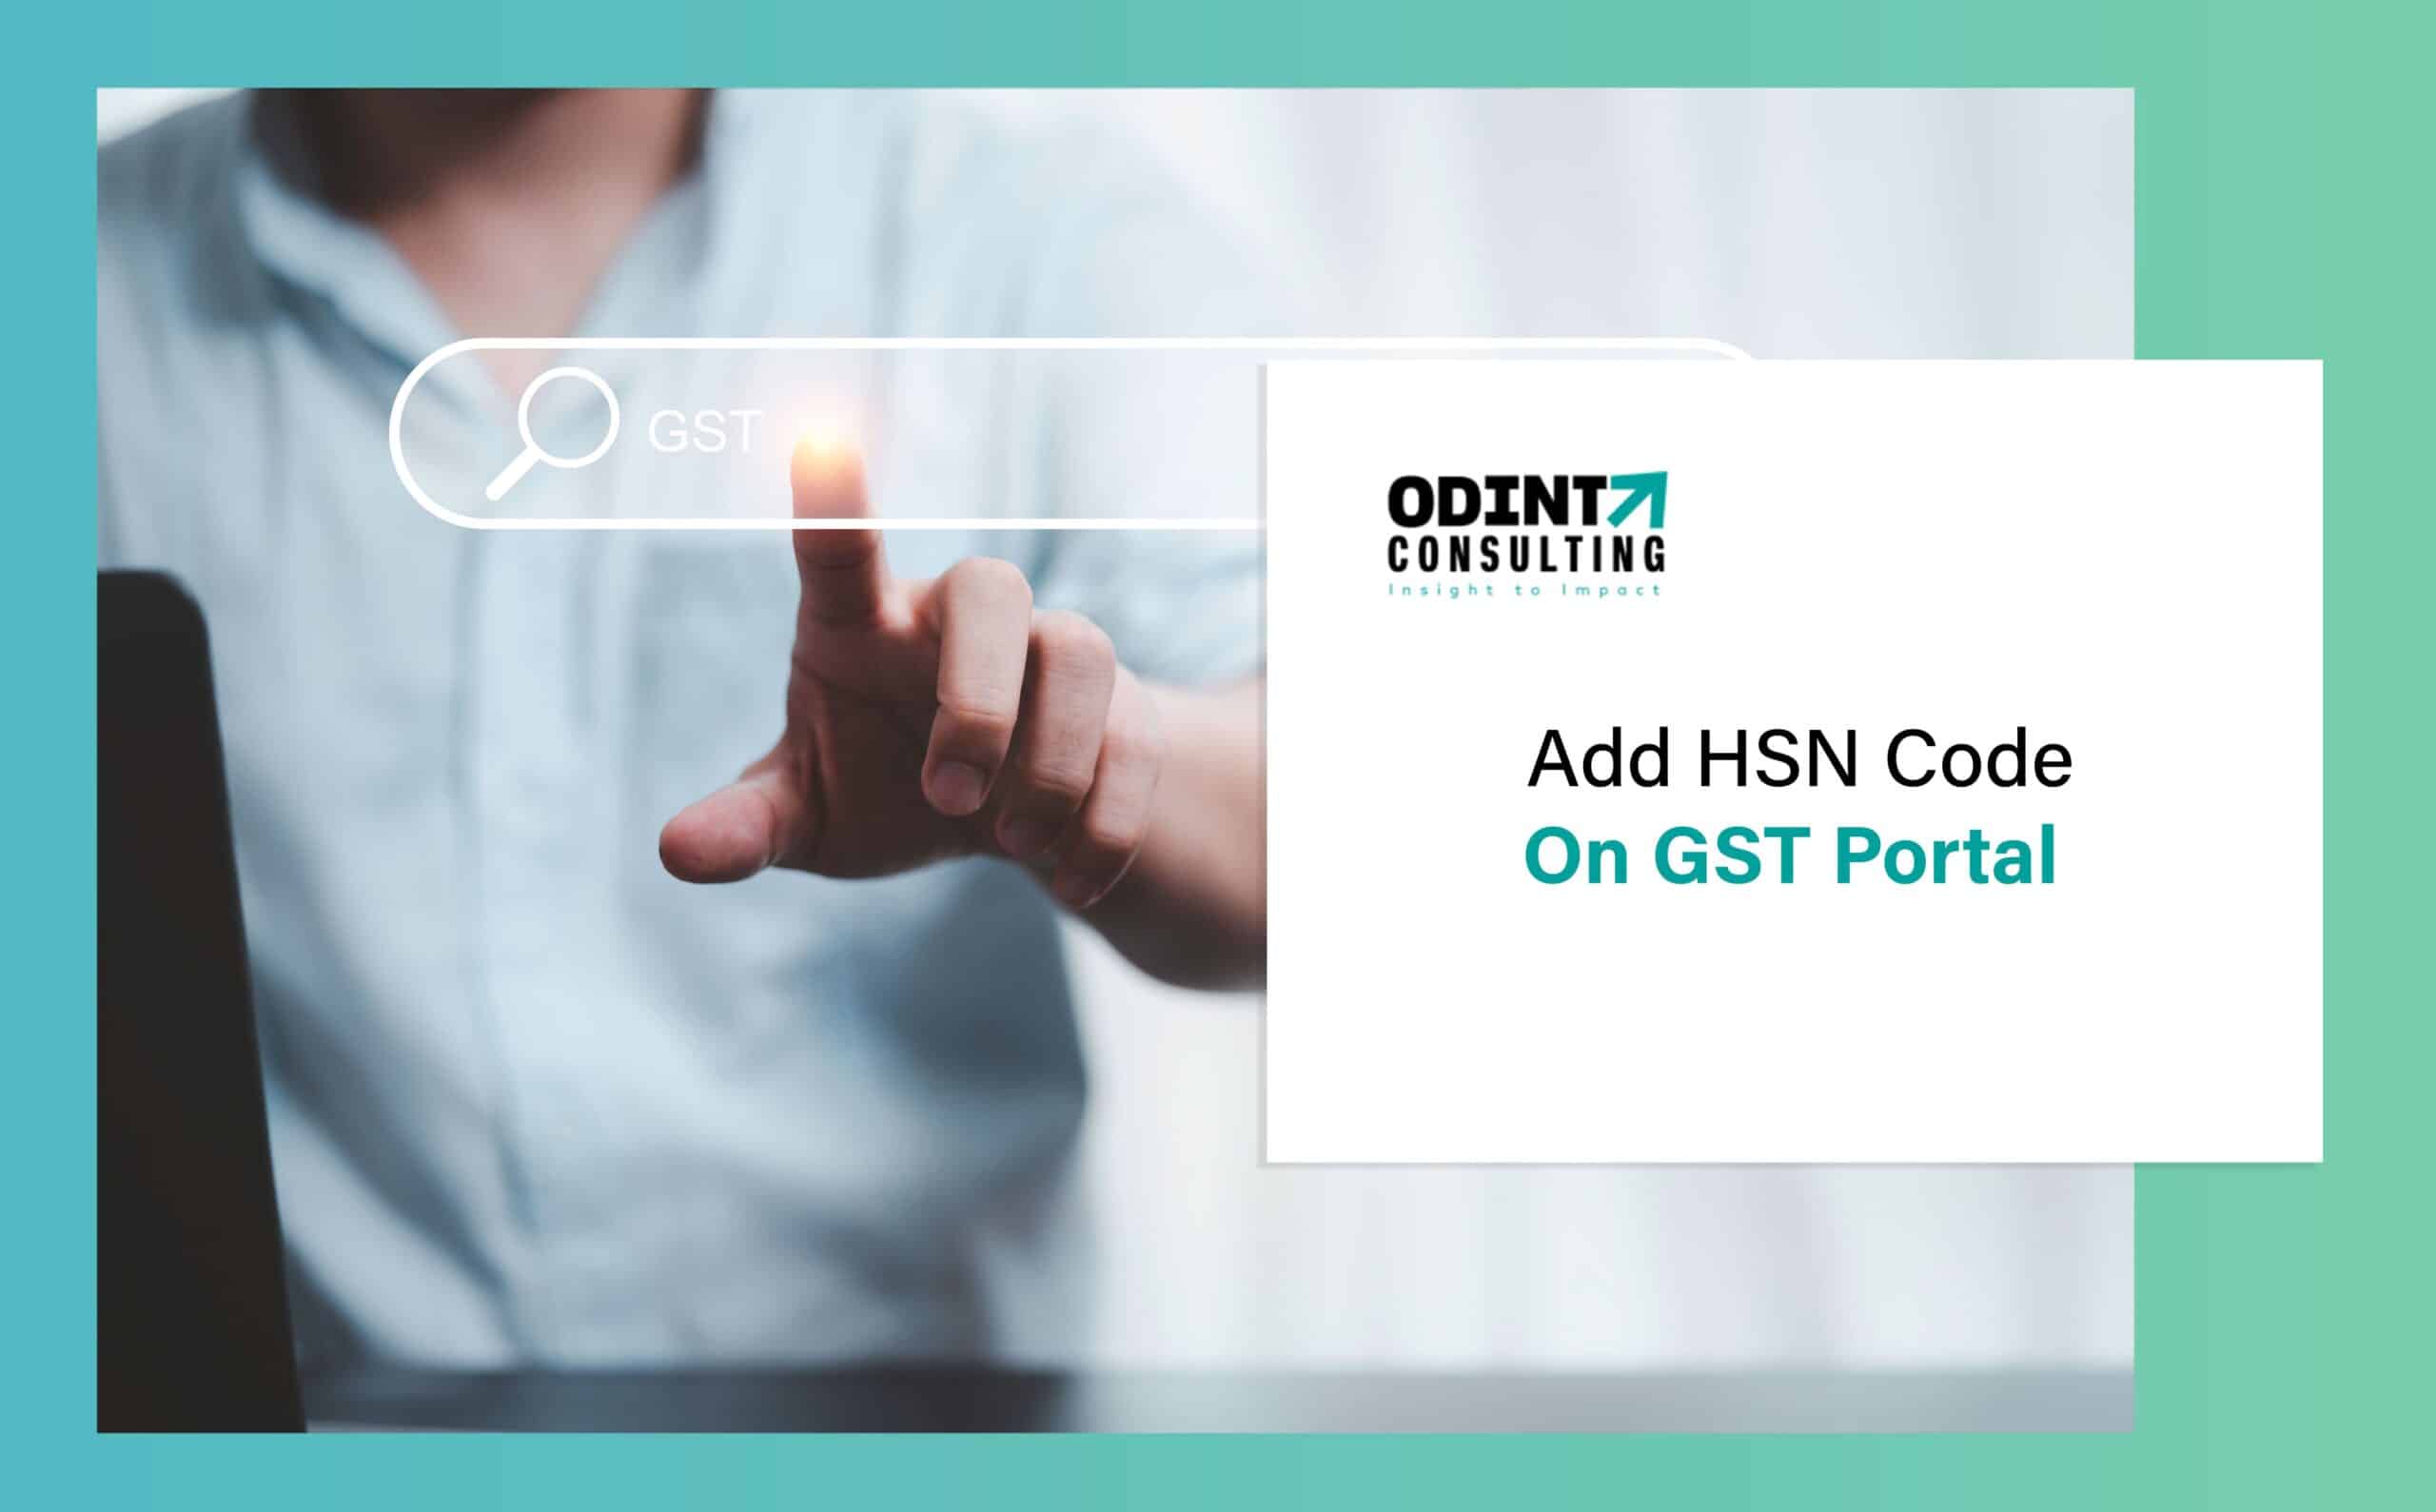 Add HSN Code On GST portal